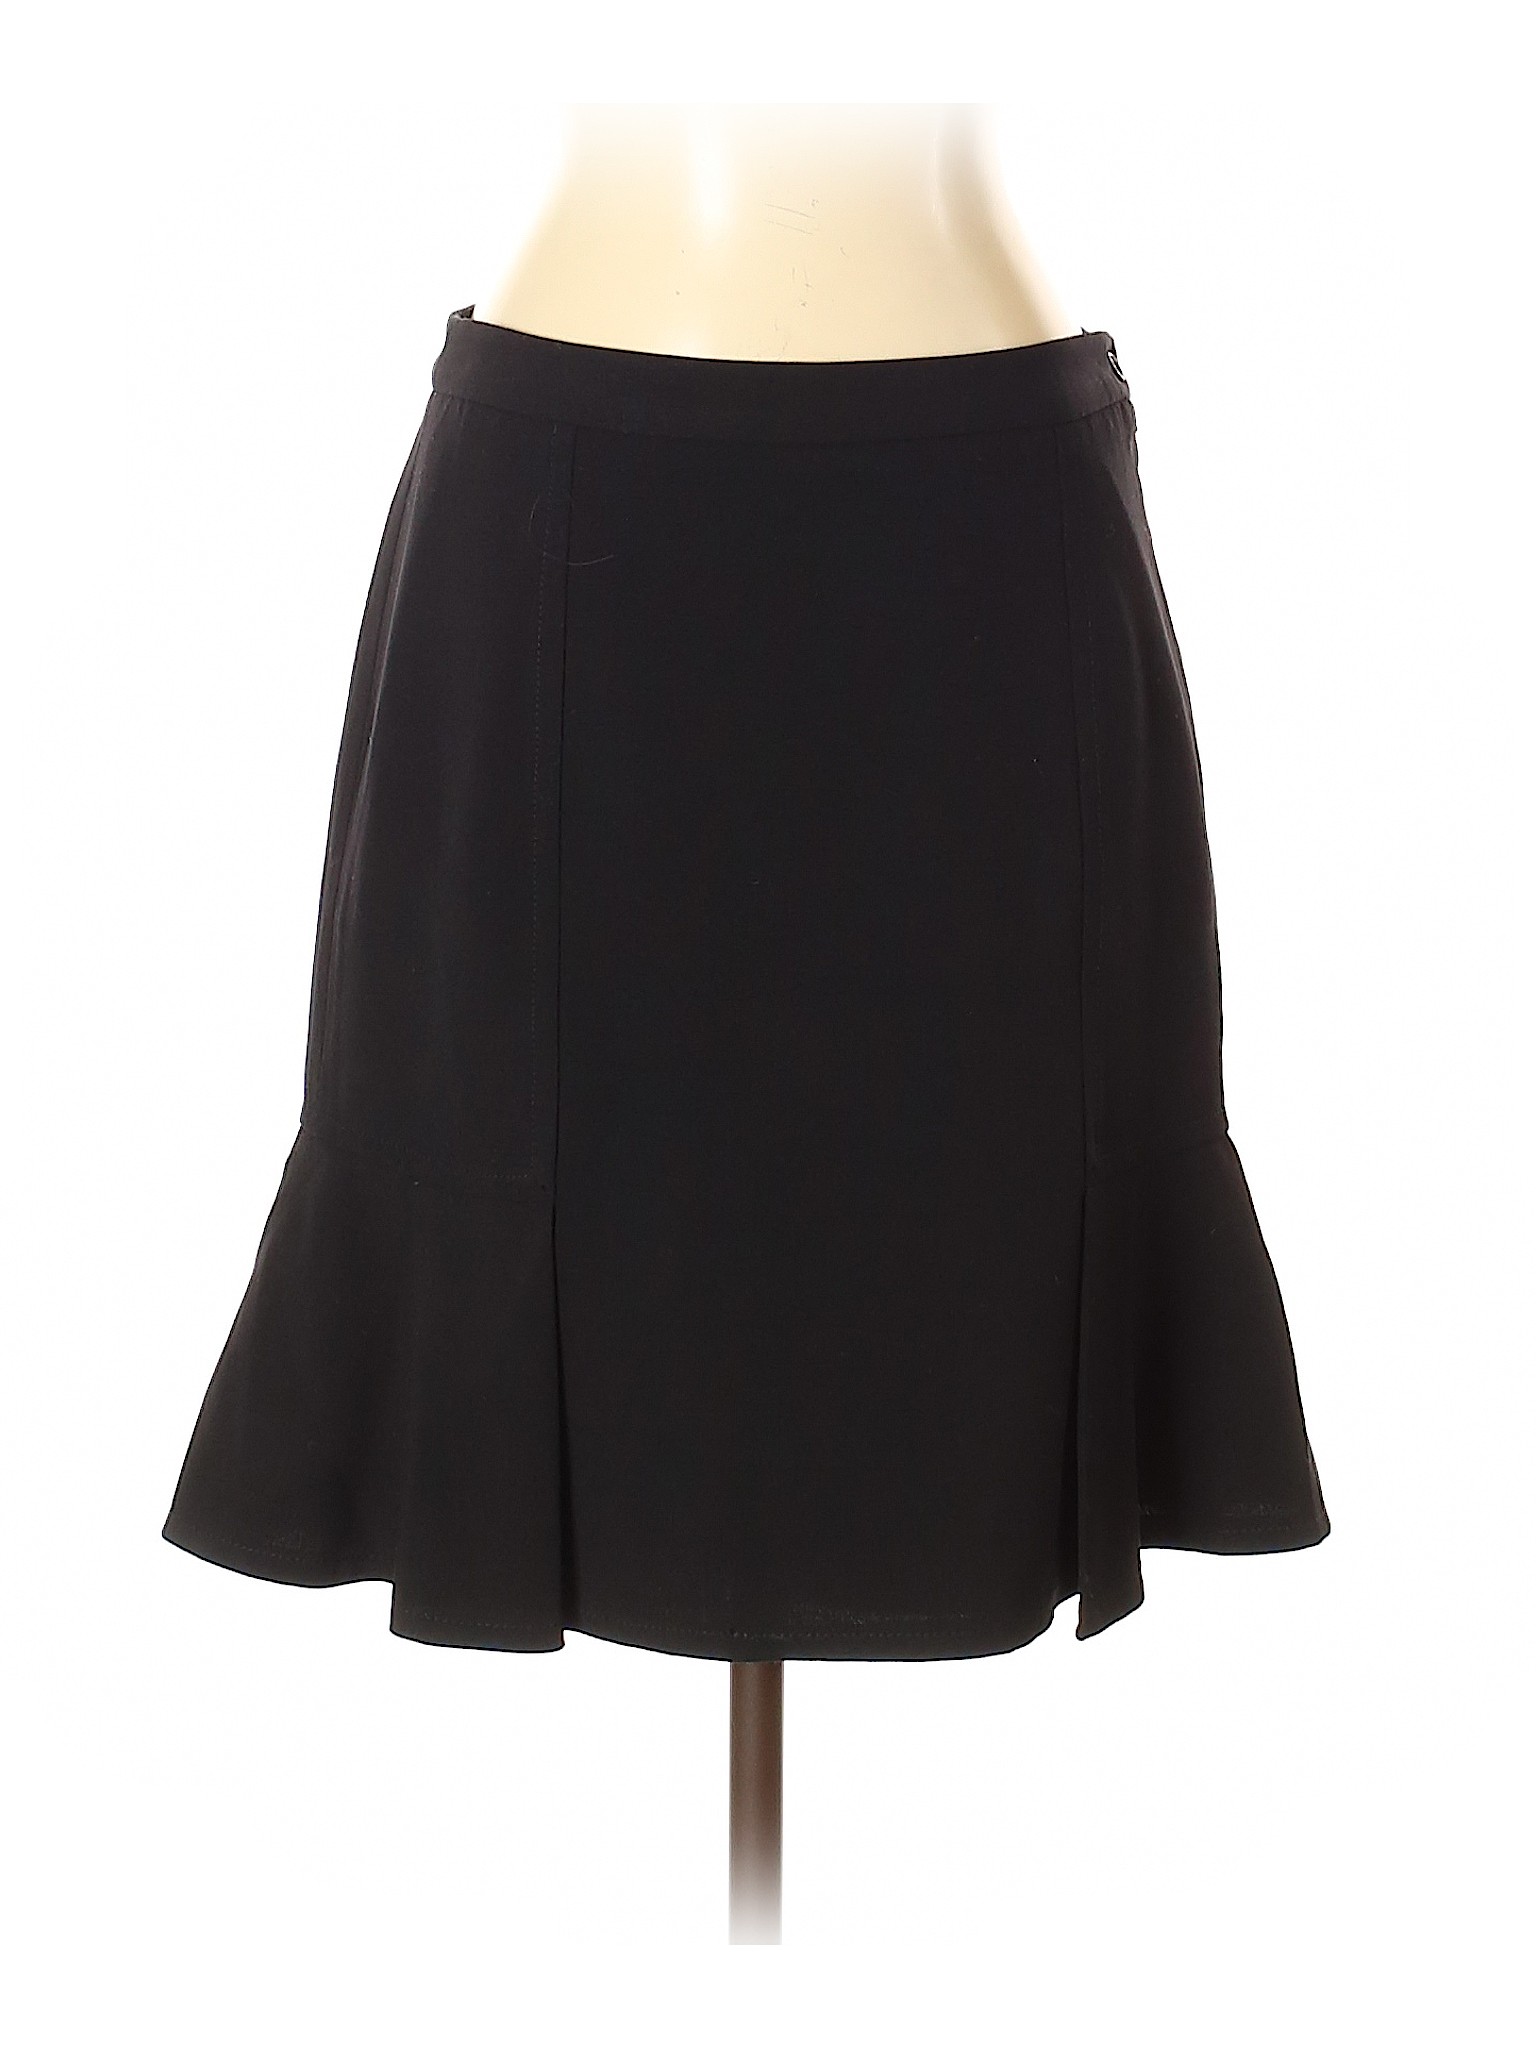 NWT Max Studio Women Black Casual Skirt 4 | eBay